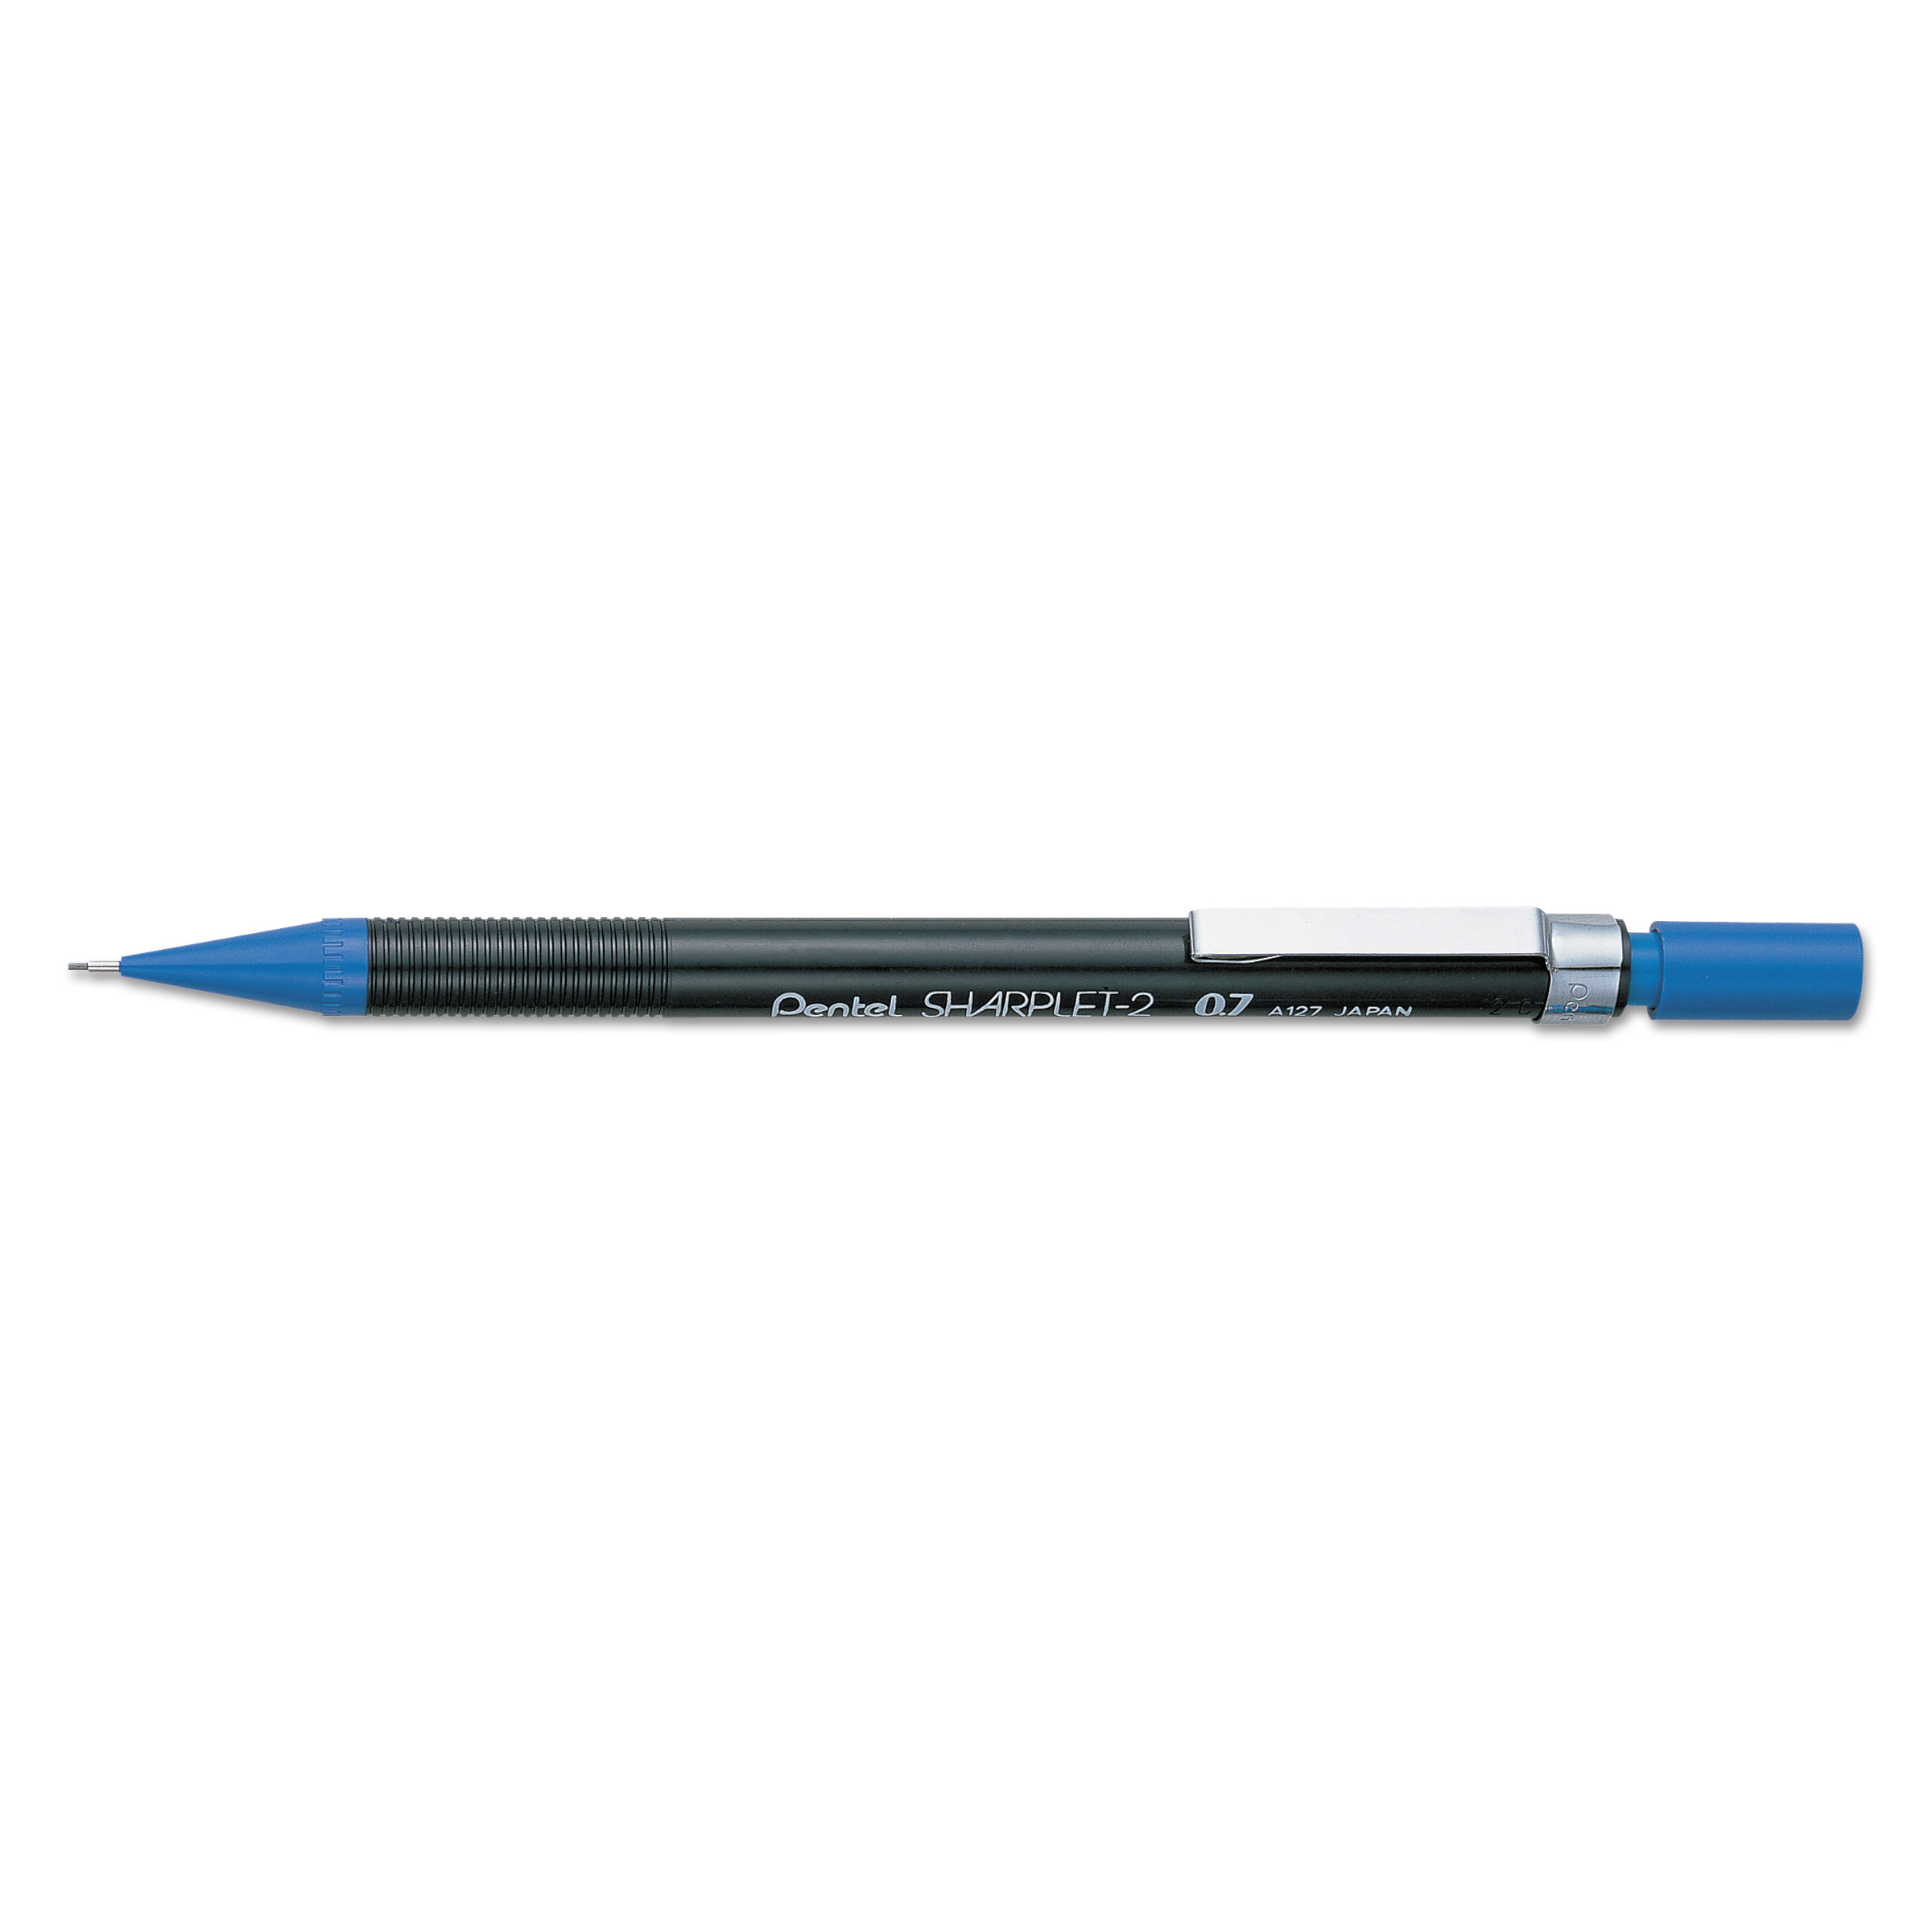  Pentel A127C Sharplet-2 Mechanical Pencil, 0.7 mm, HB (#2.5), Black Lead, Dark Blue Barrel (PENA127C) 